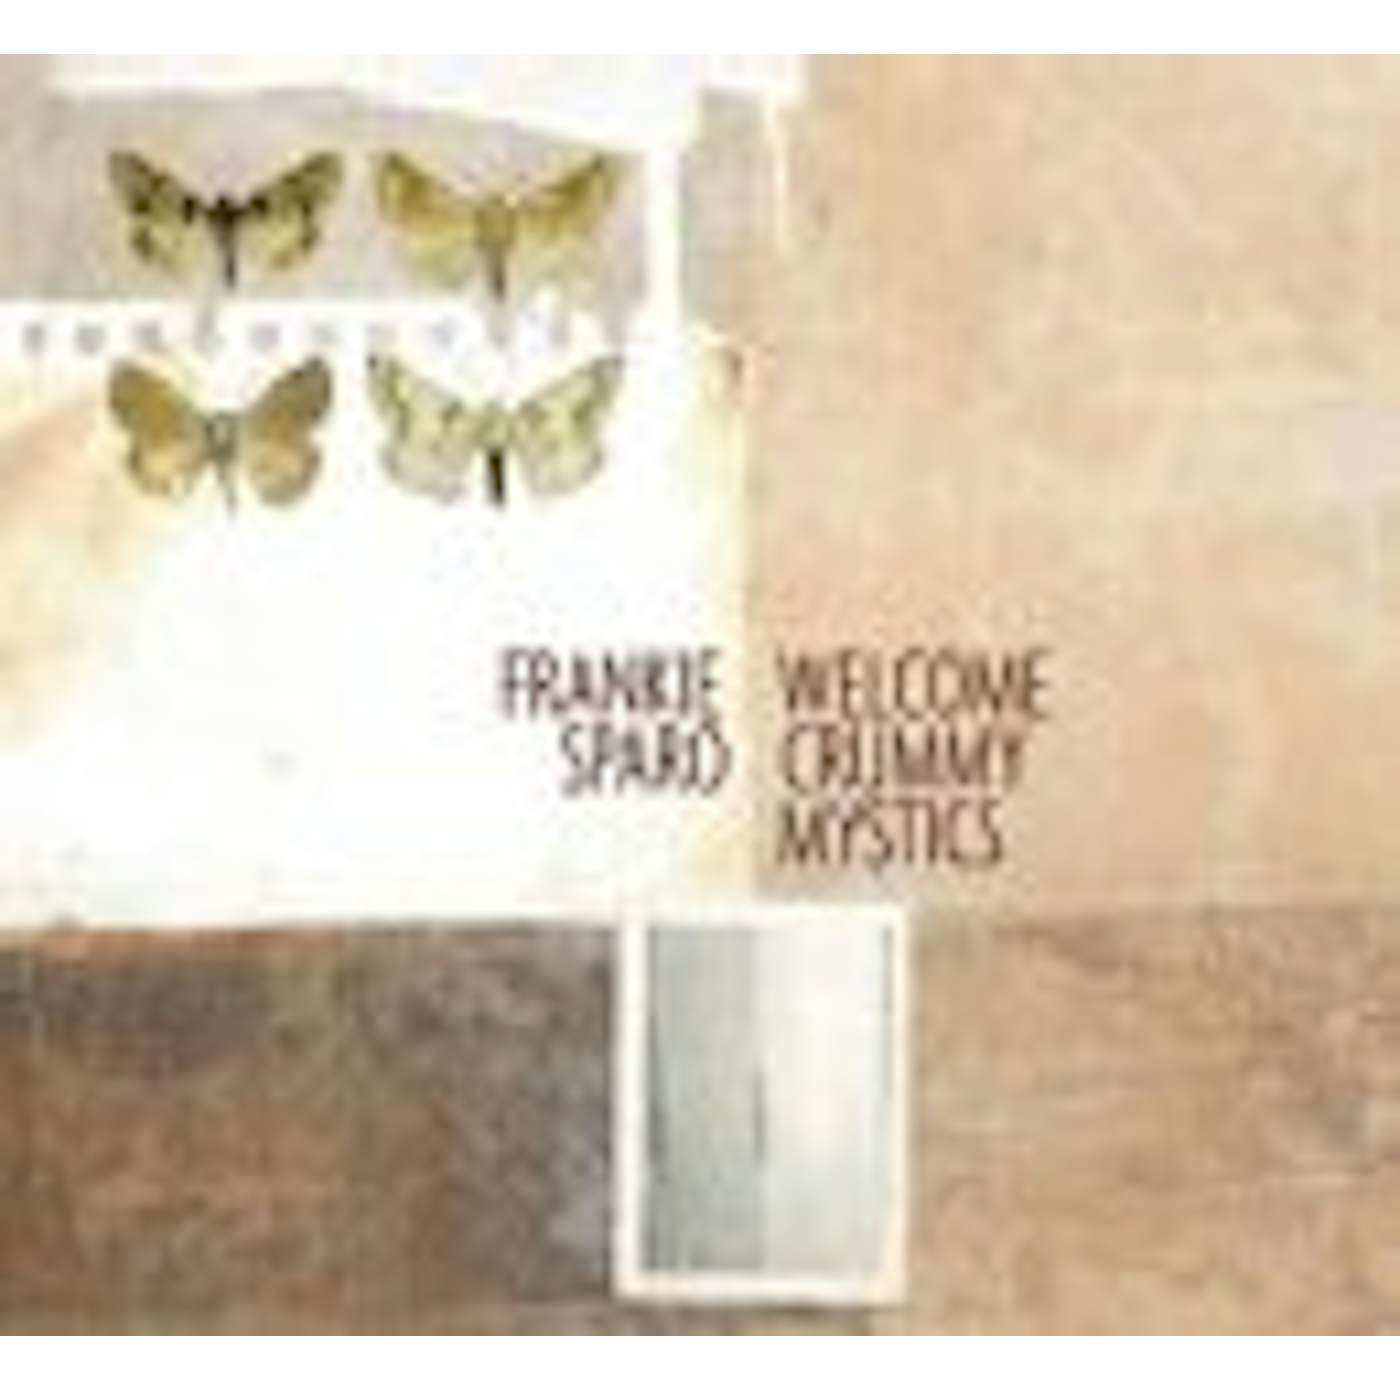 Frankie Sparo Welcome Crummy Mystics Vinyl Record